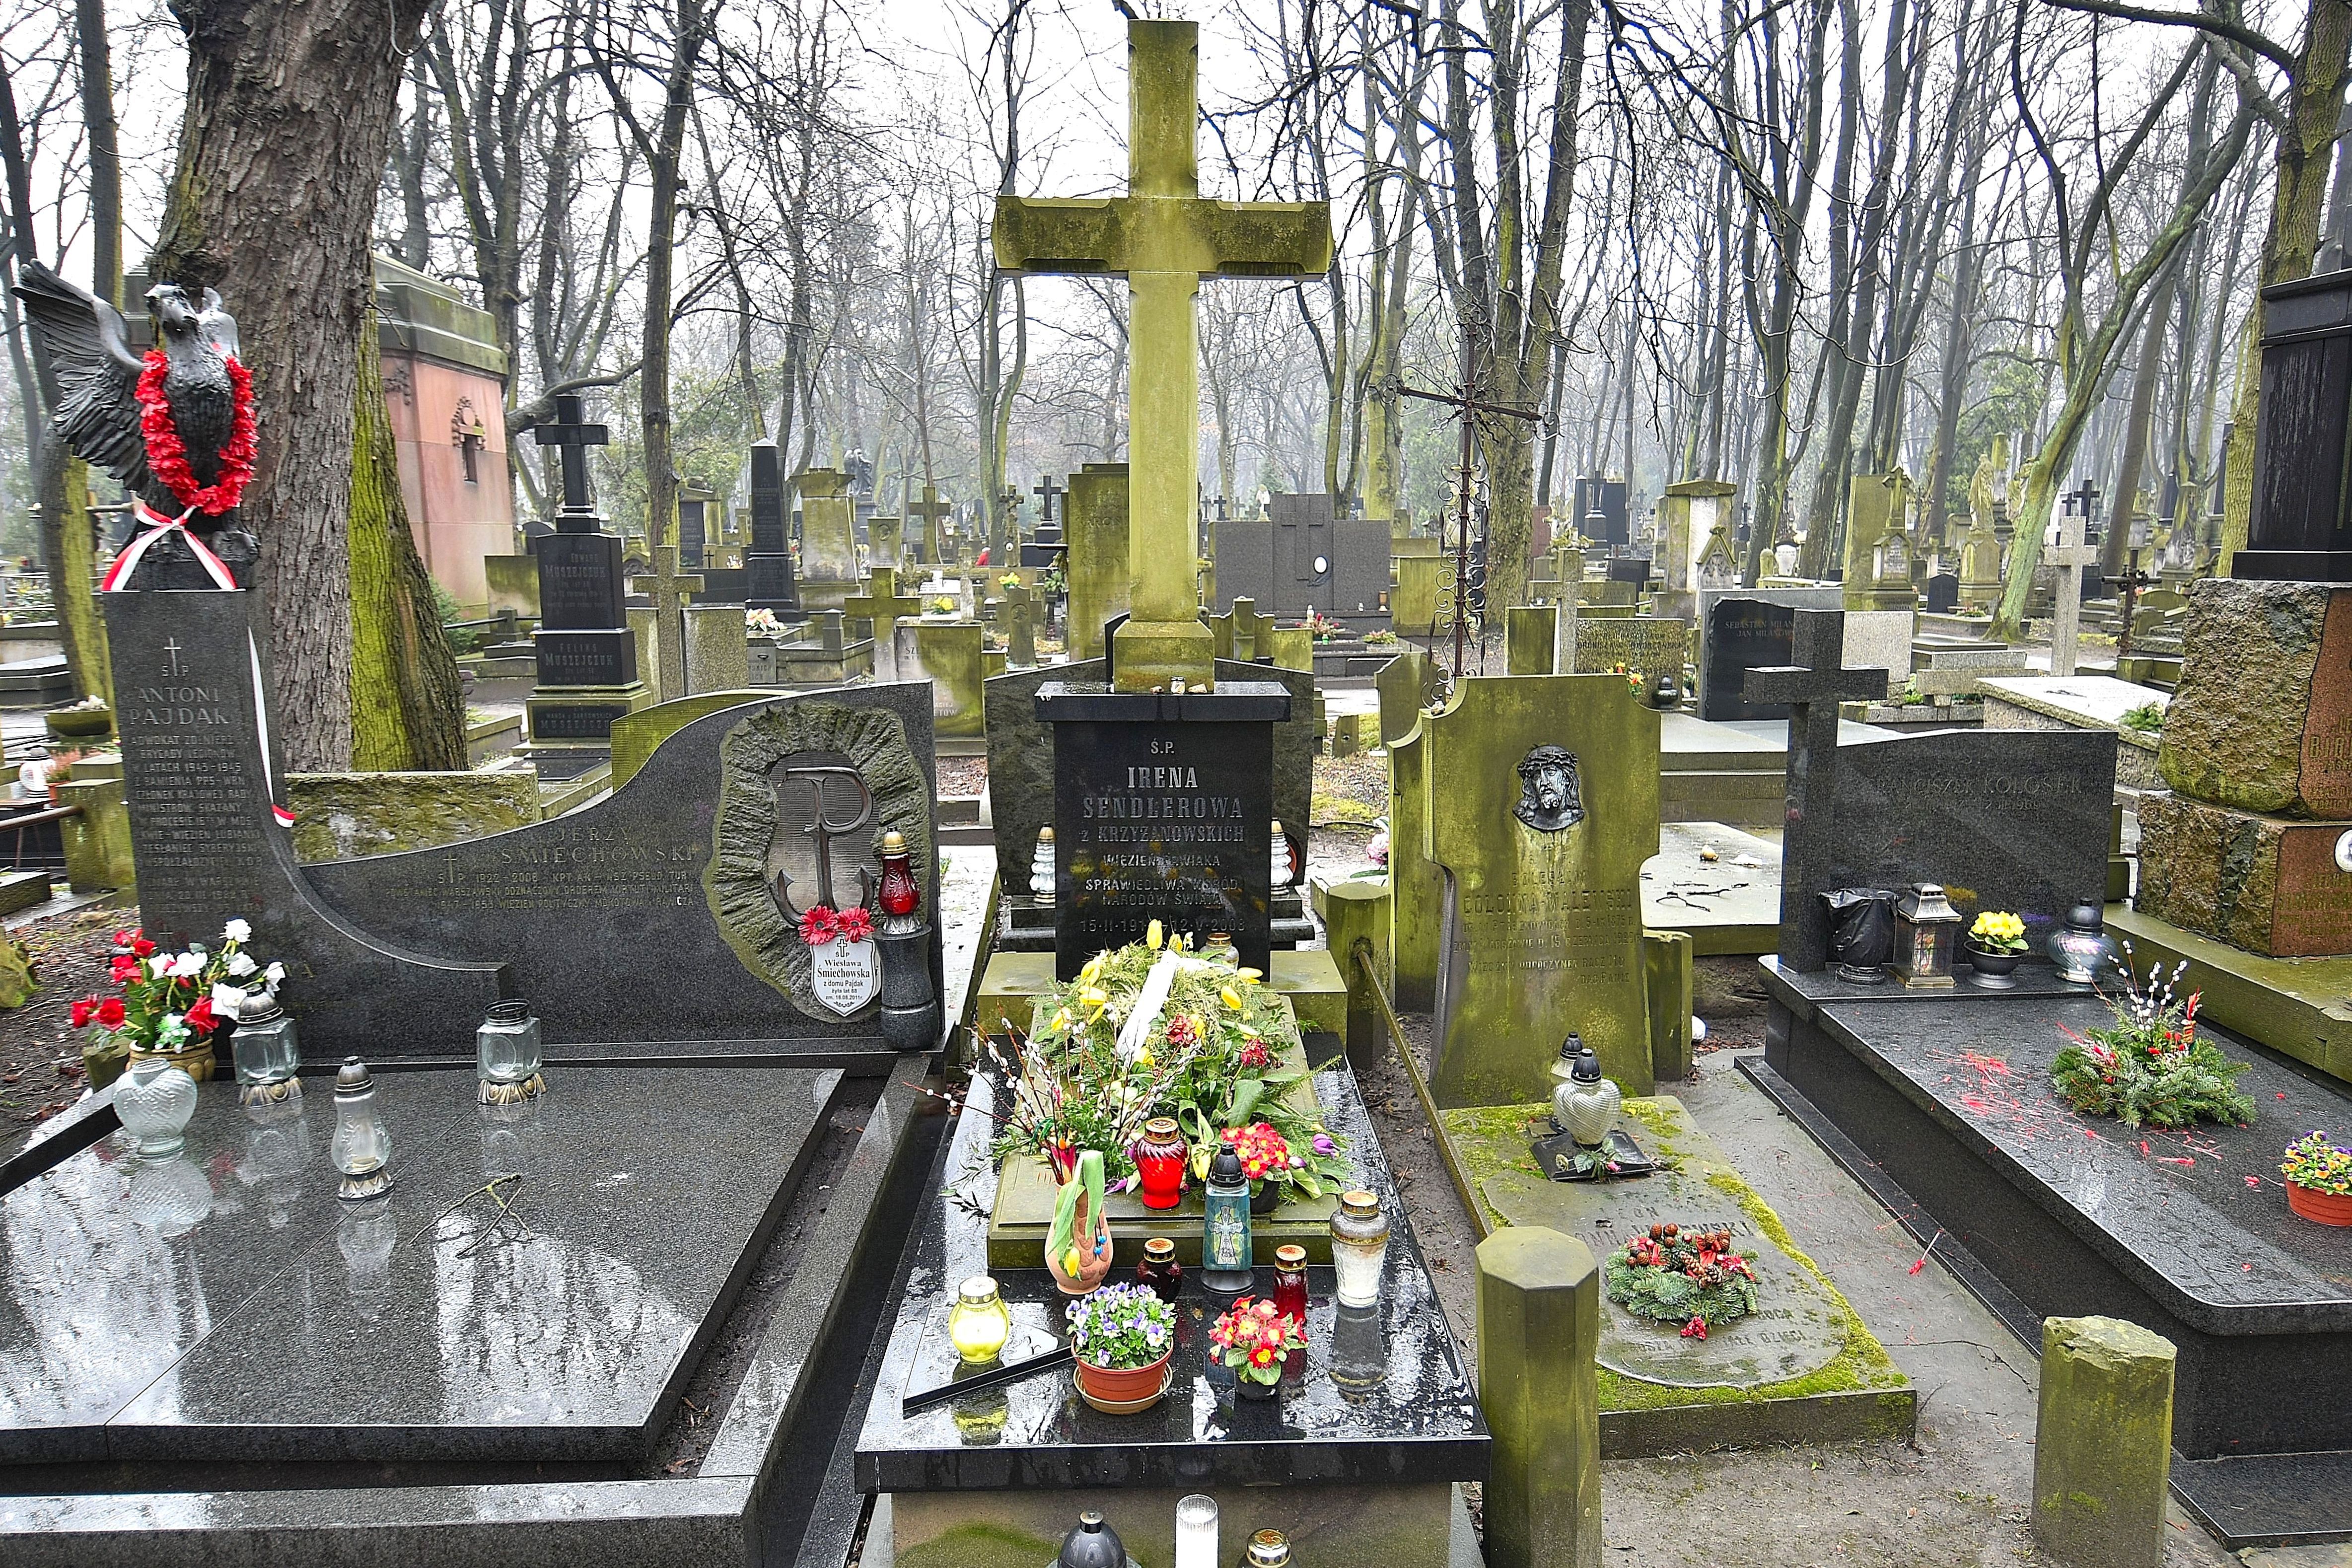 Wikipedia, Irena Sendlerowa, Powzki Cemetery - P, Powzki Cemetery - S, Powzki Cemetery - W, Powz